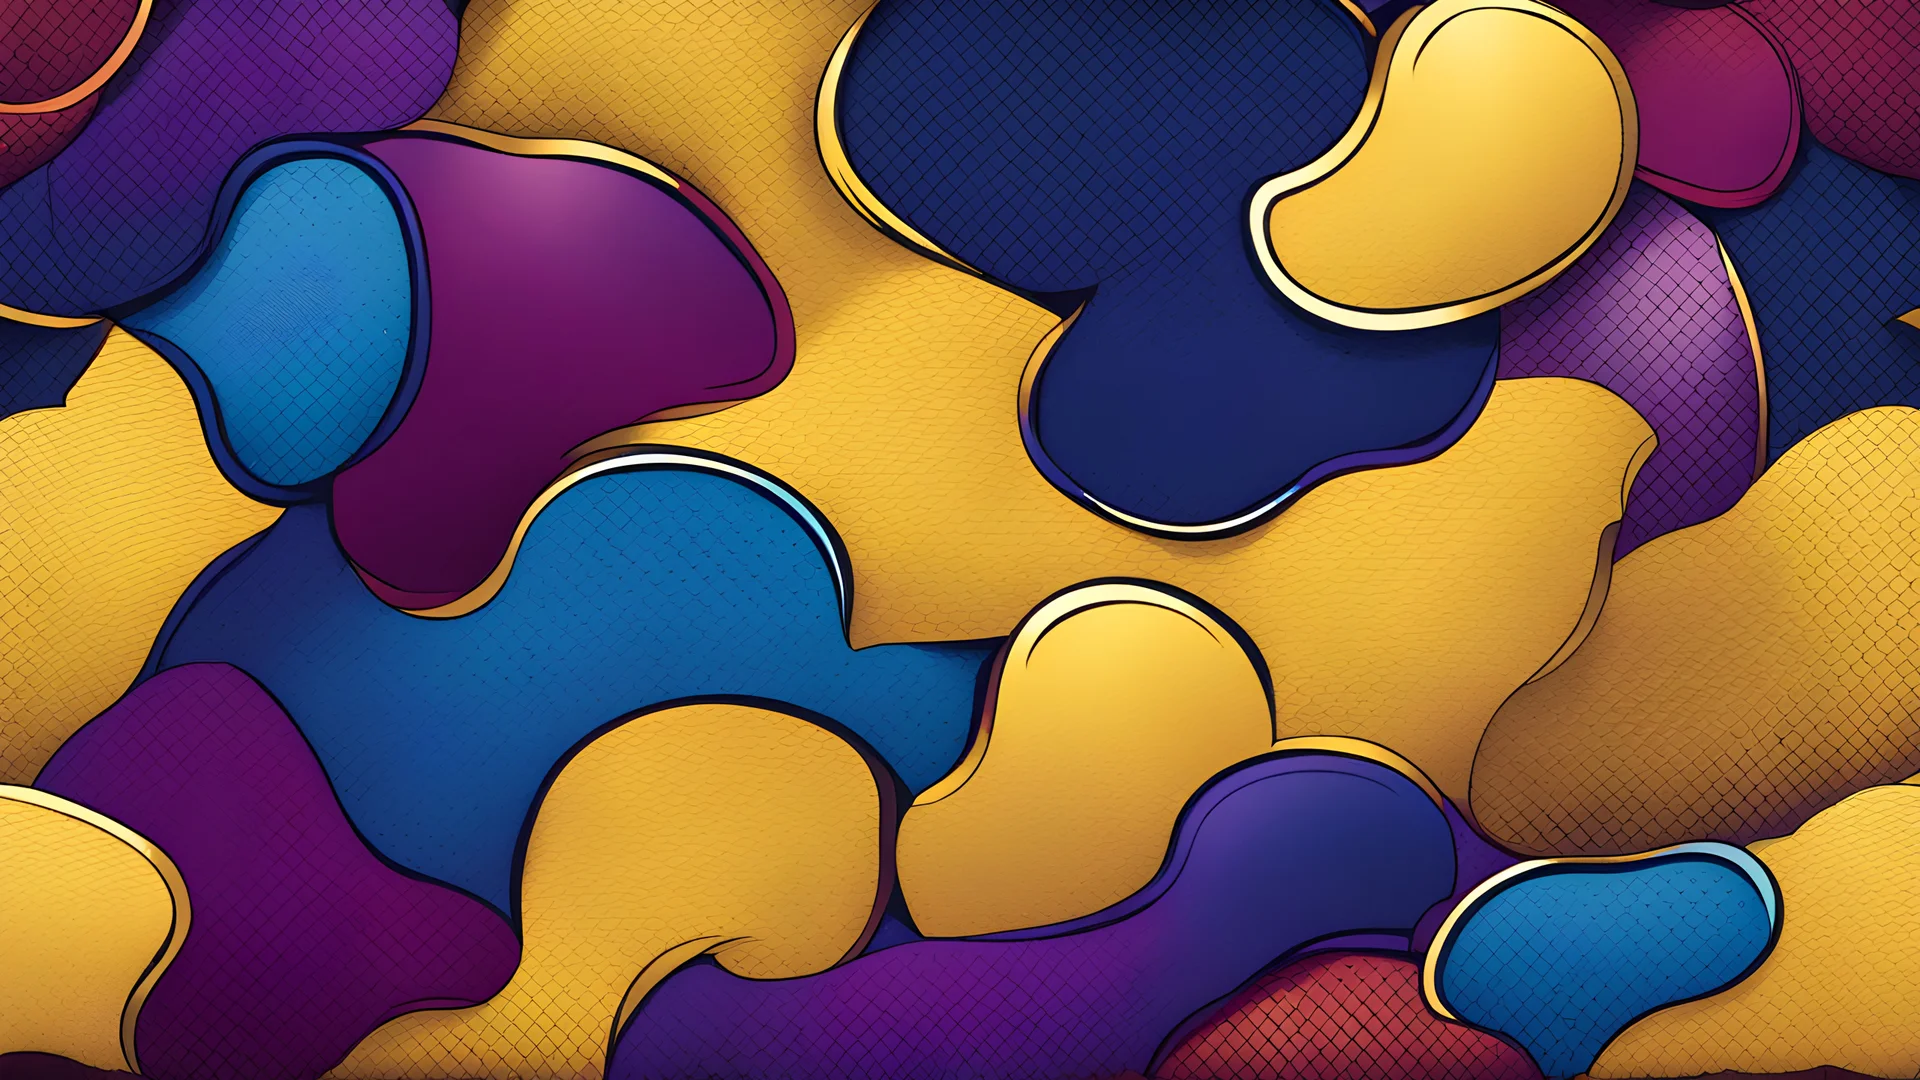 Hyper Realistic Multicolored Comic-Pattern-Texture (Golden, Yellow, Navy-Blue, Maroon & Purple).